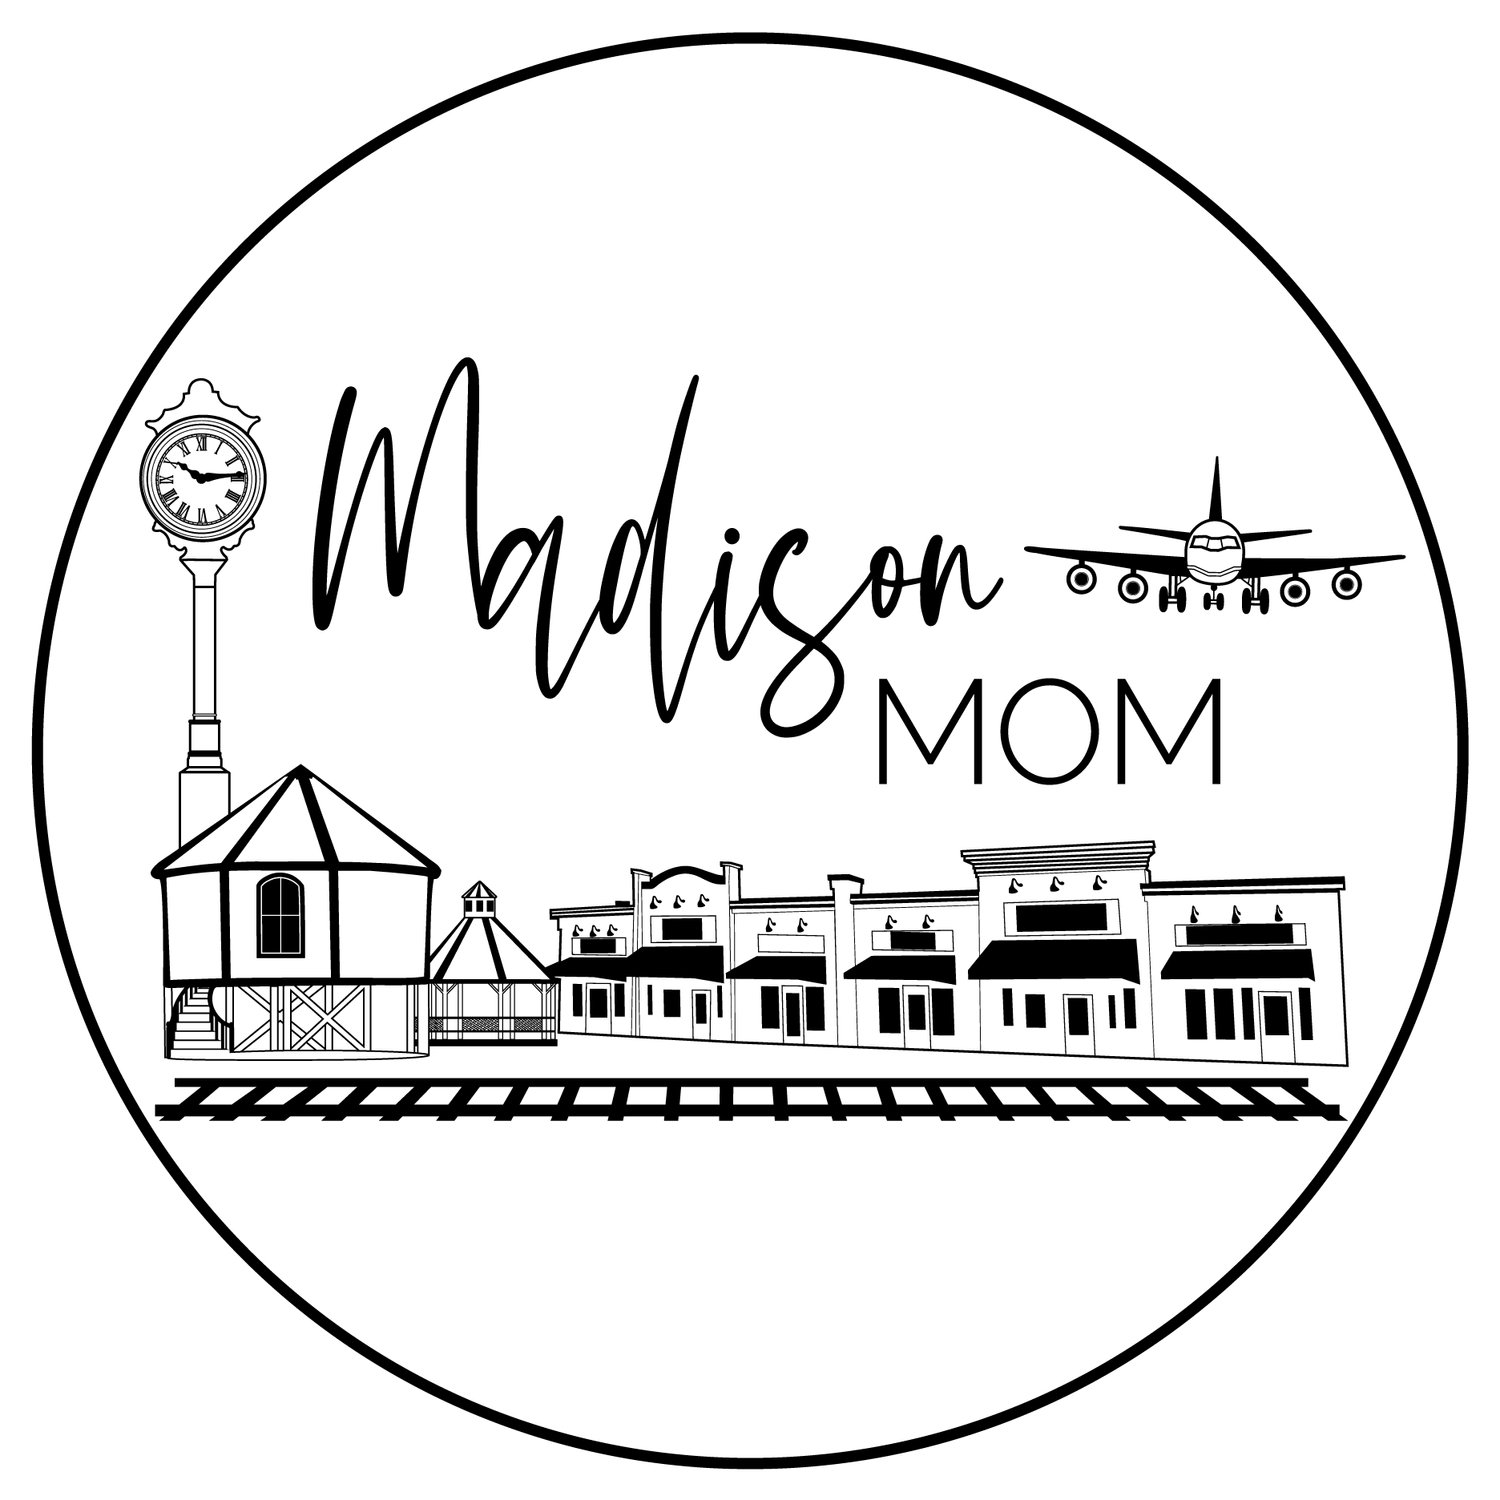 The Madison Mom